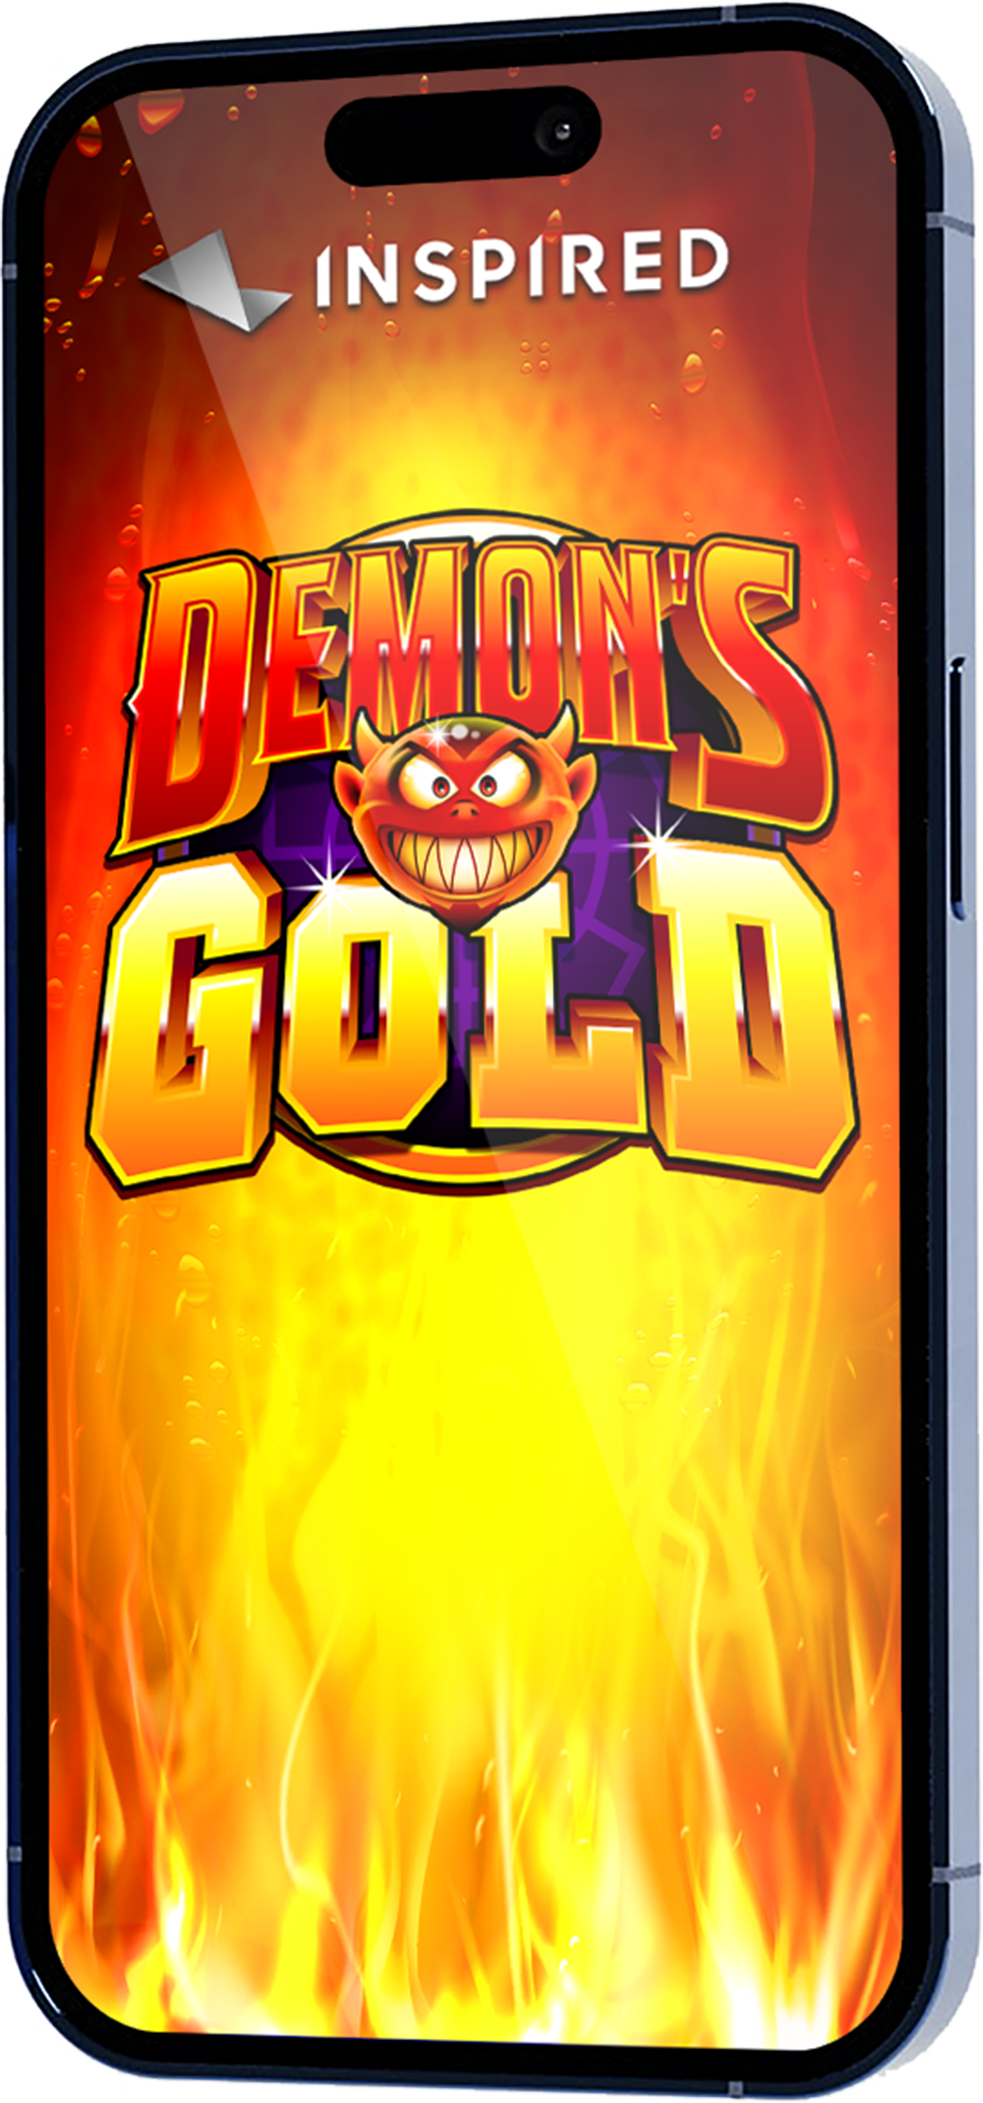 Demons gold mobile